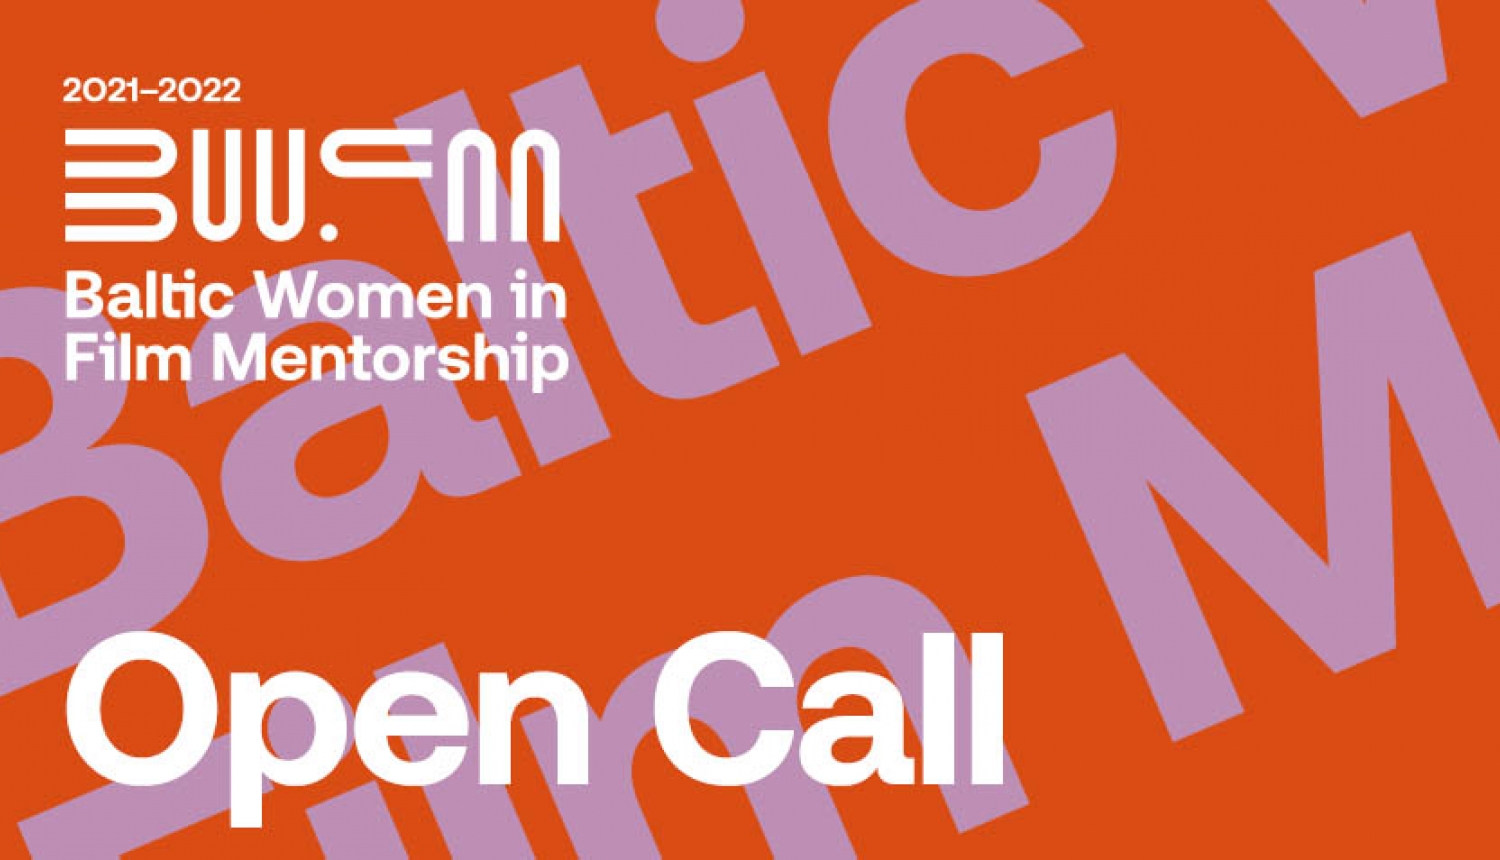 “Baltic Women in Film Mentorship 2021-2022” program